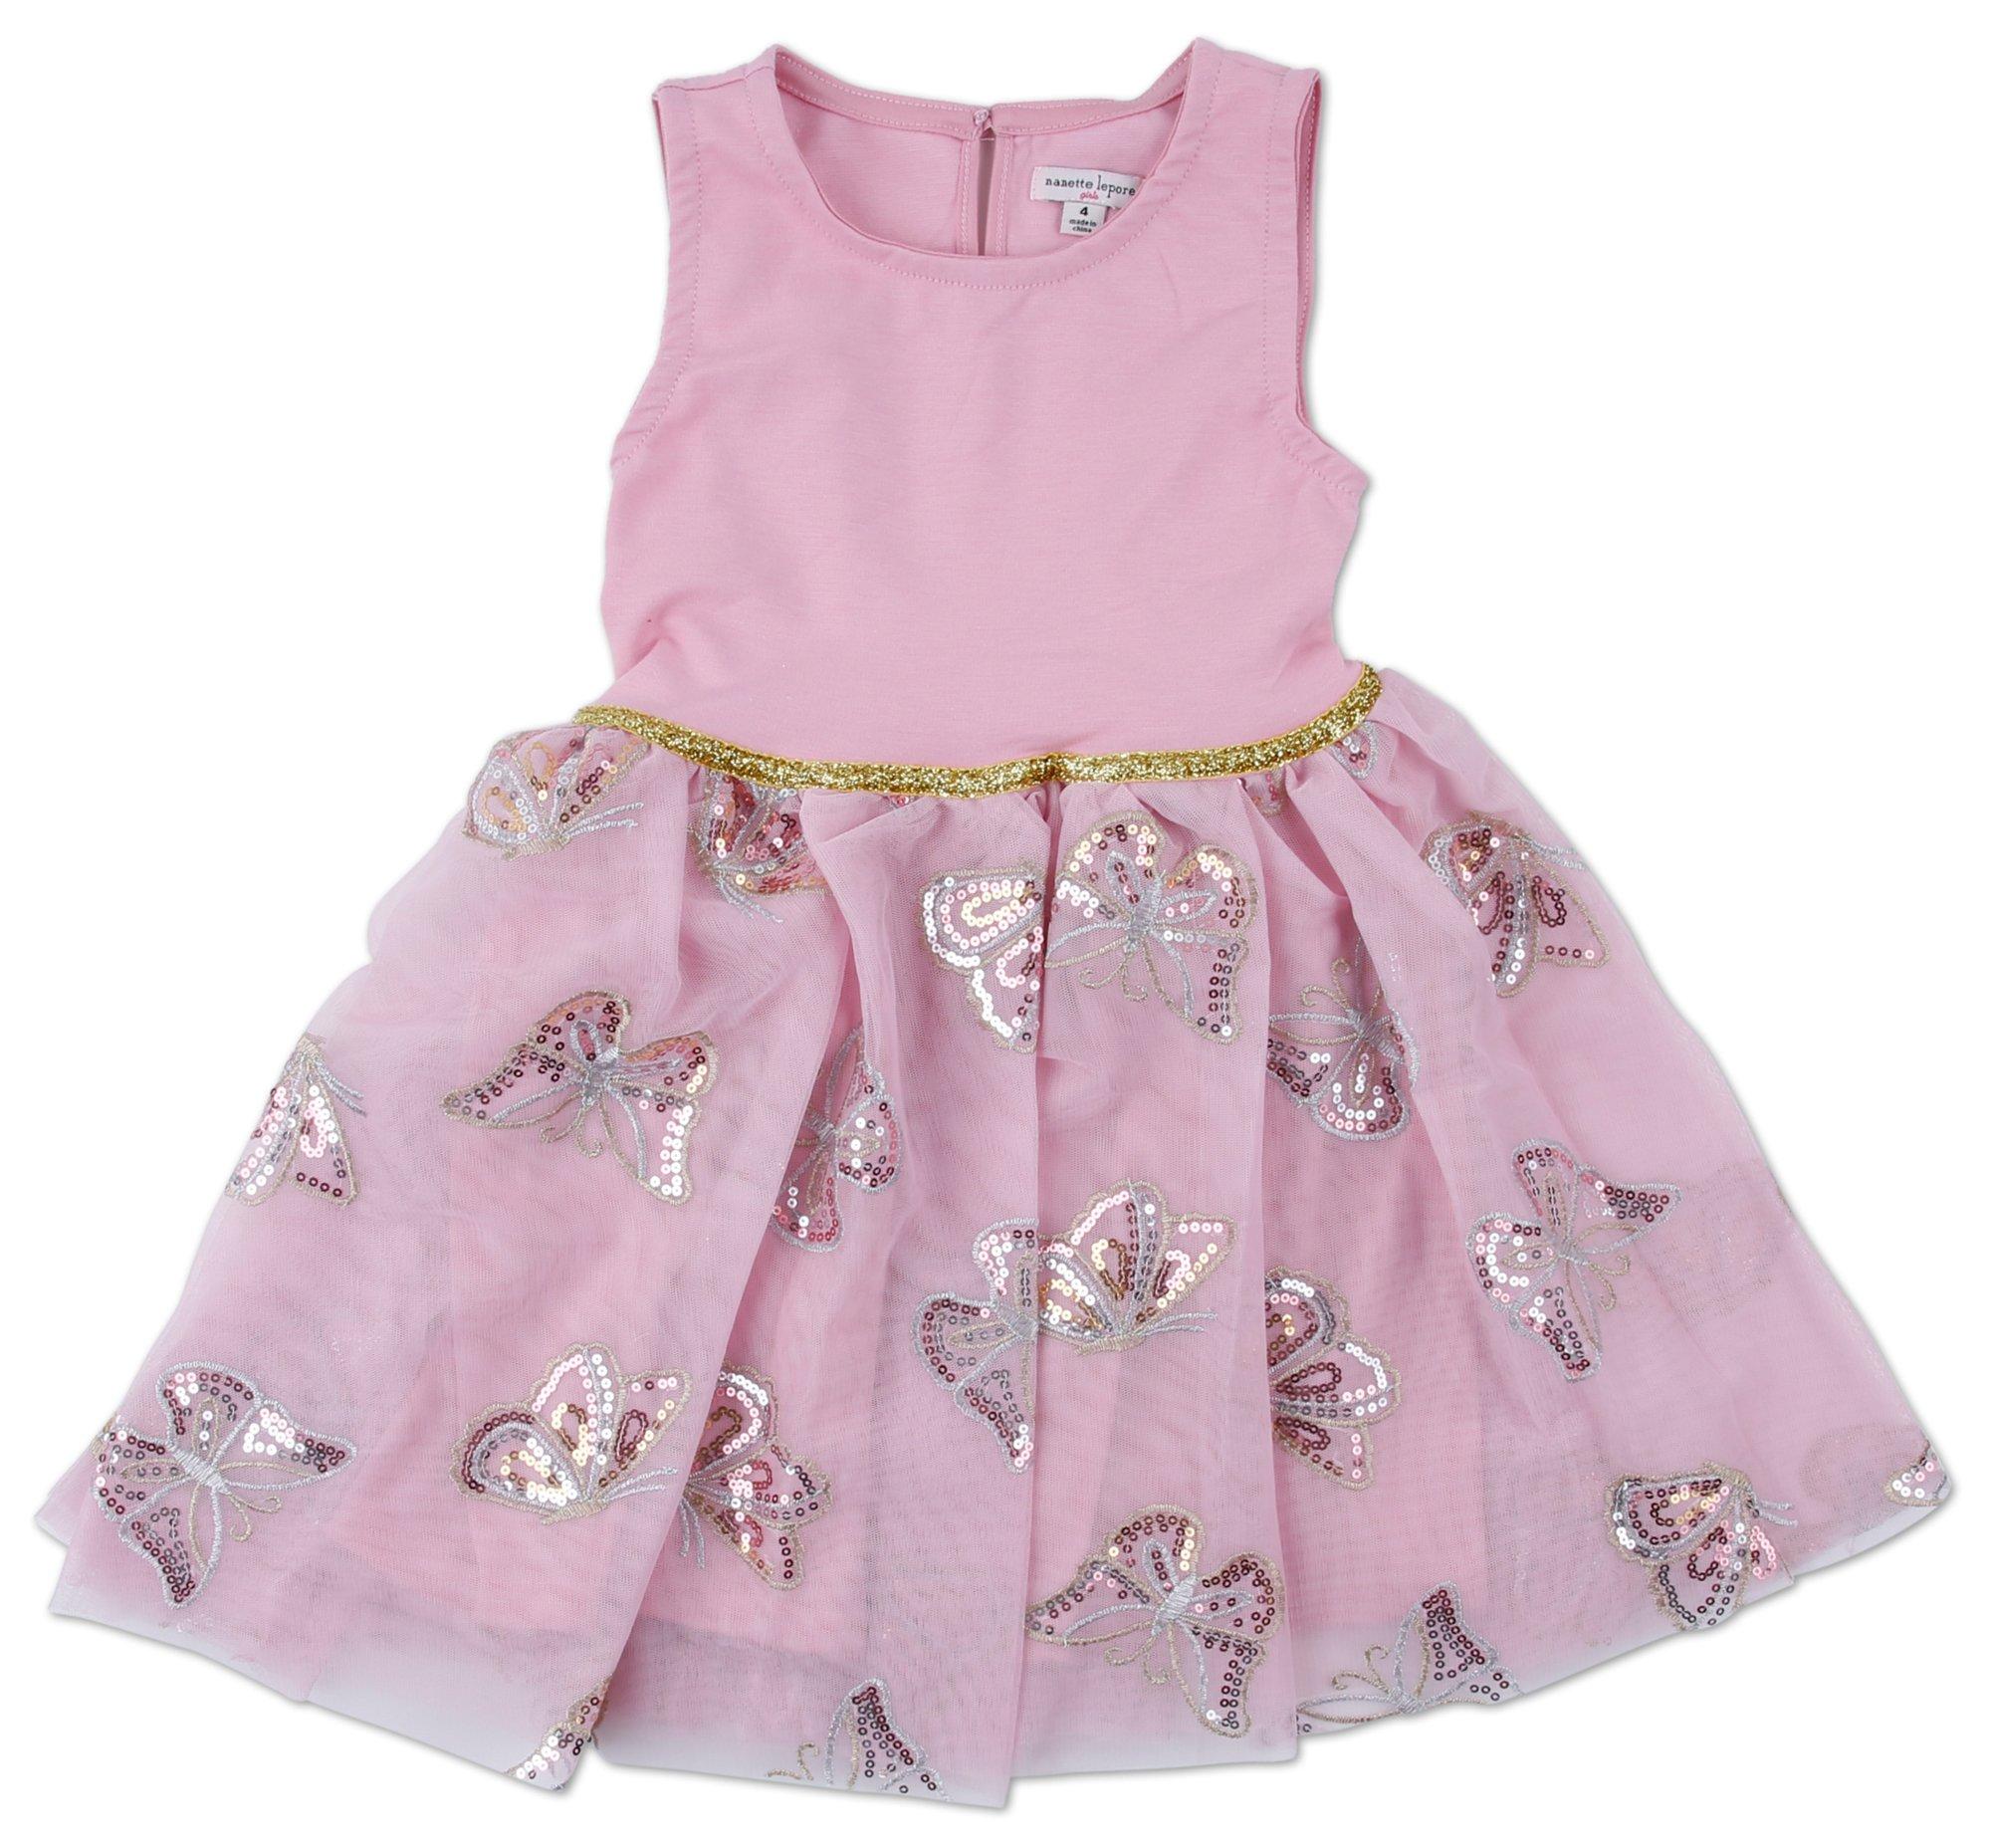 Little Girls Solid Sequin Tulle Dress